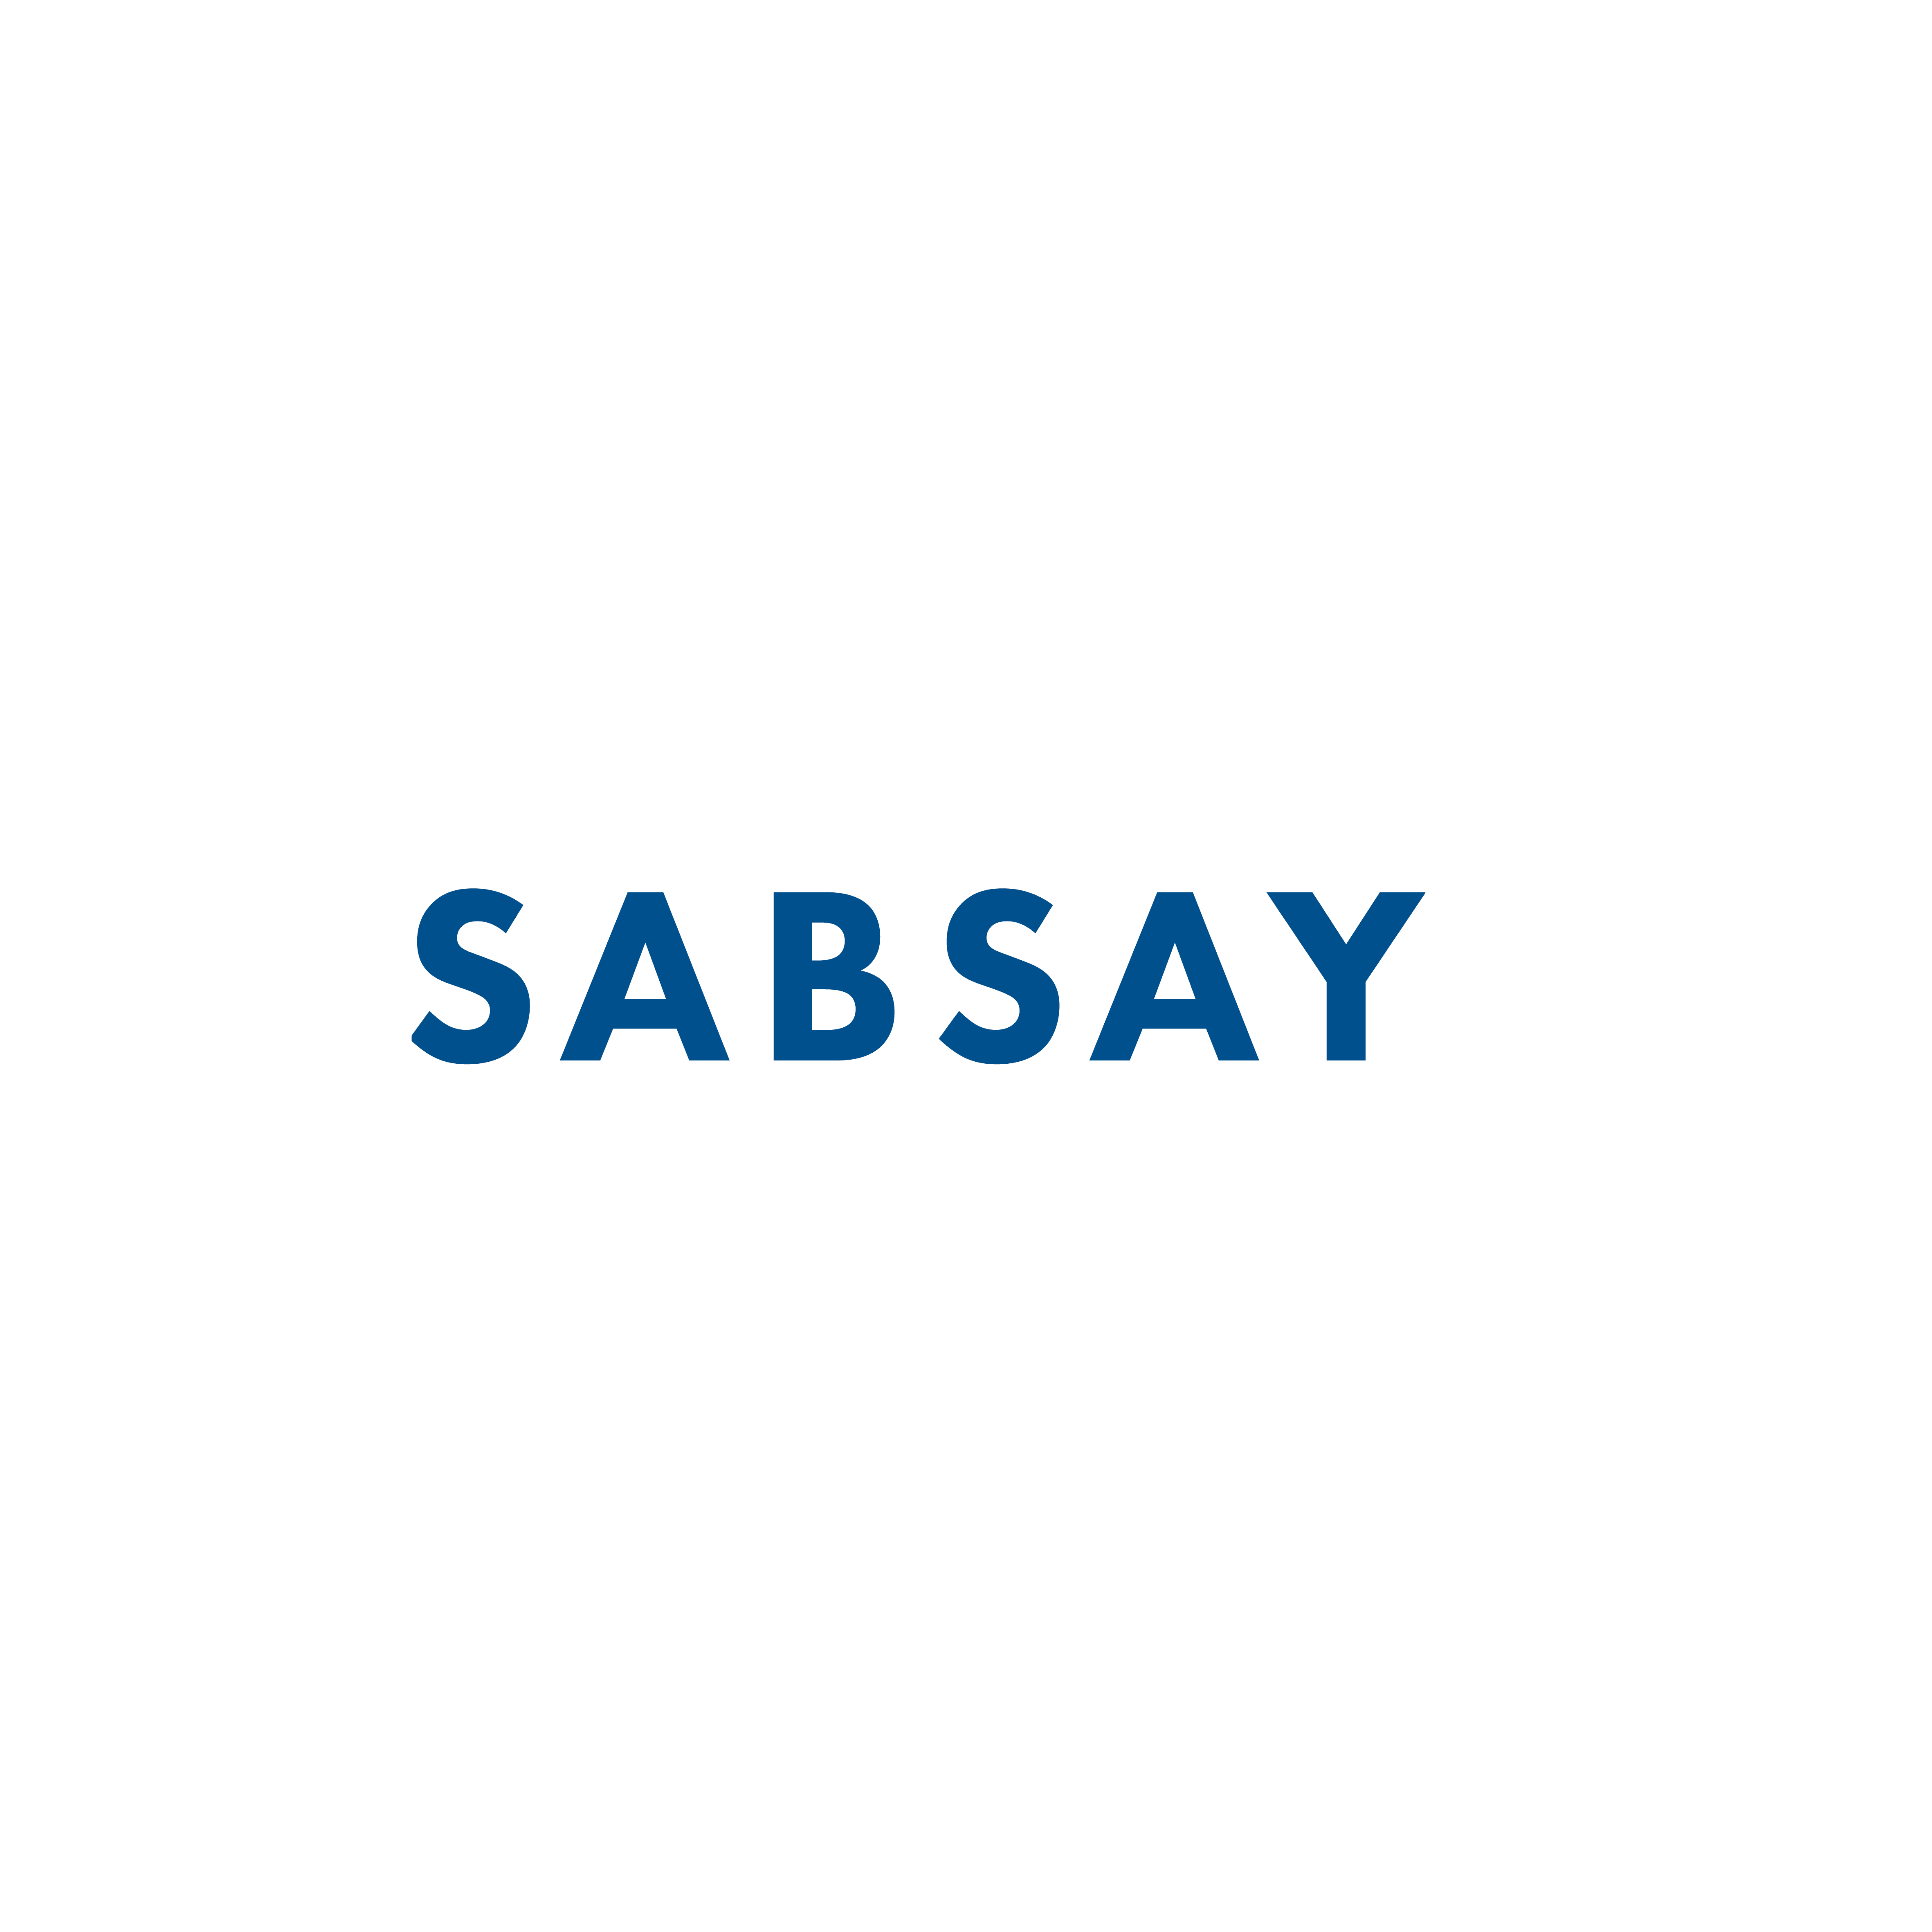 SABSAY Gallery company logo